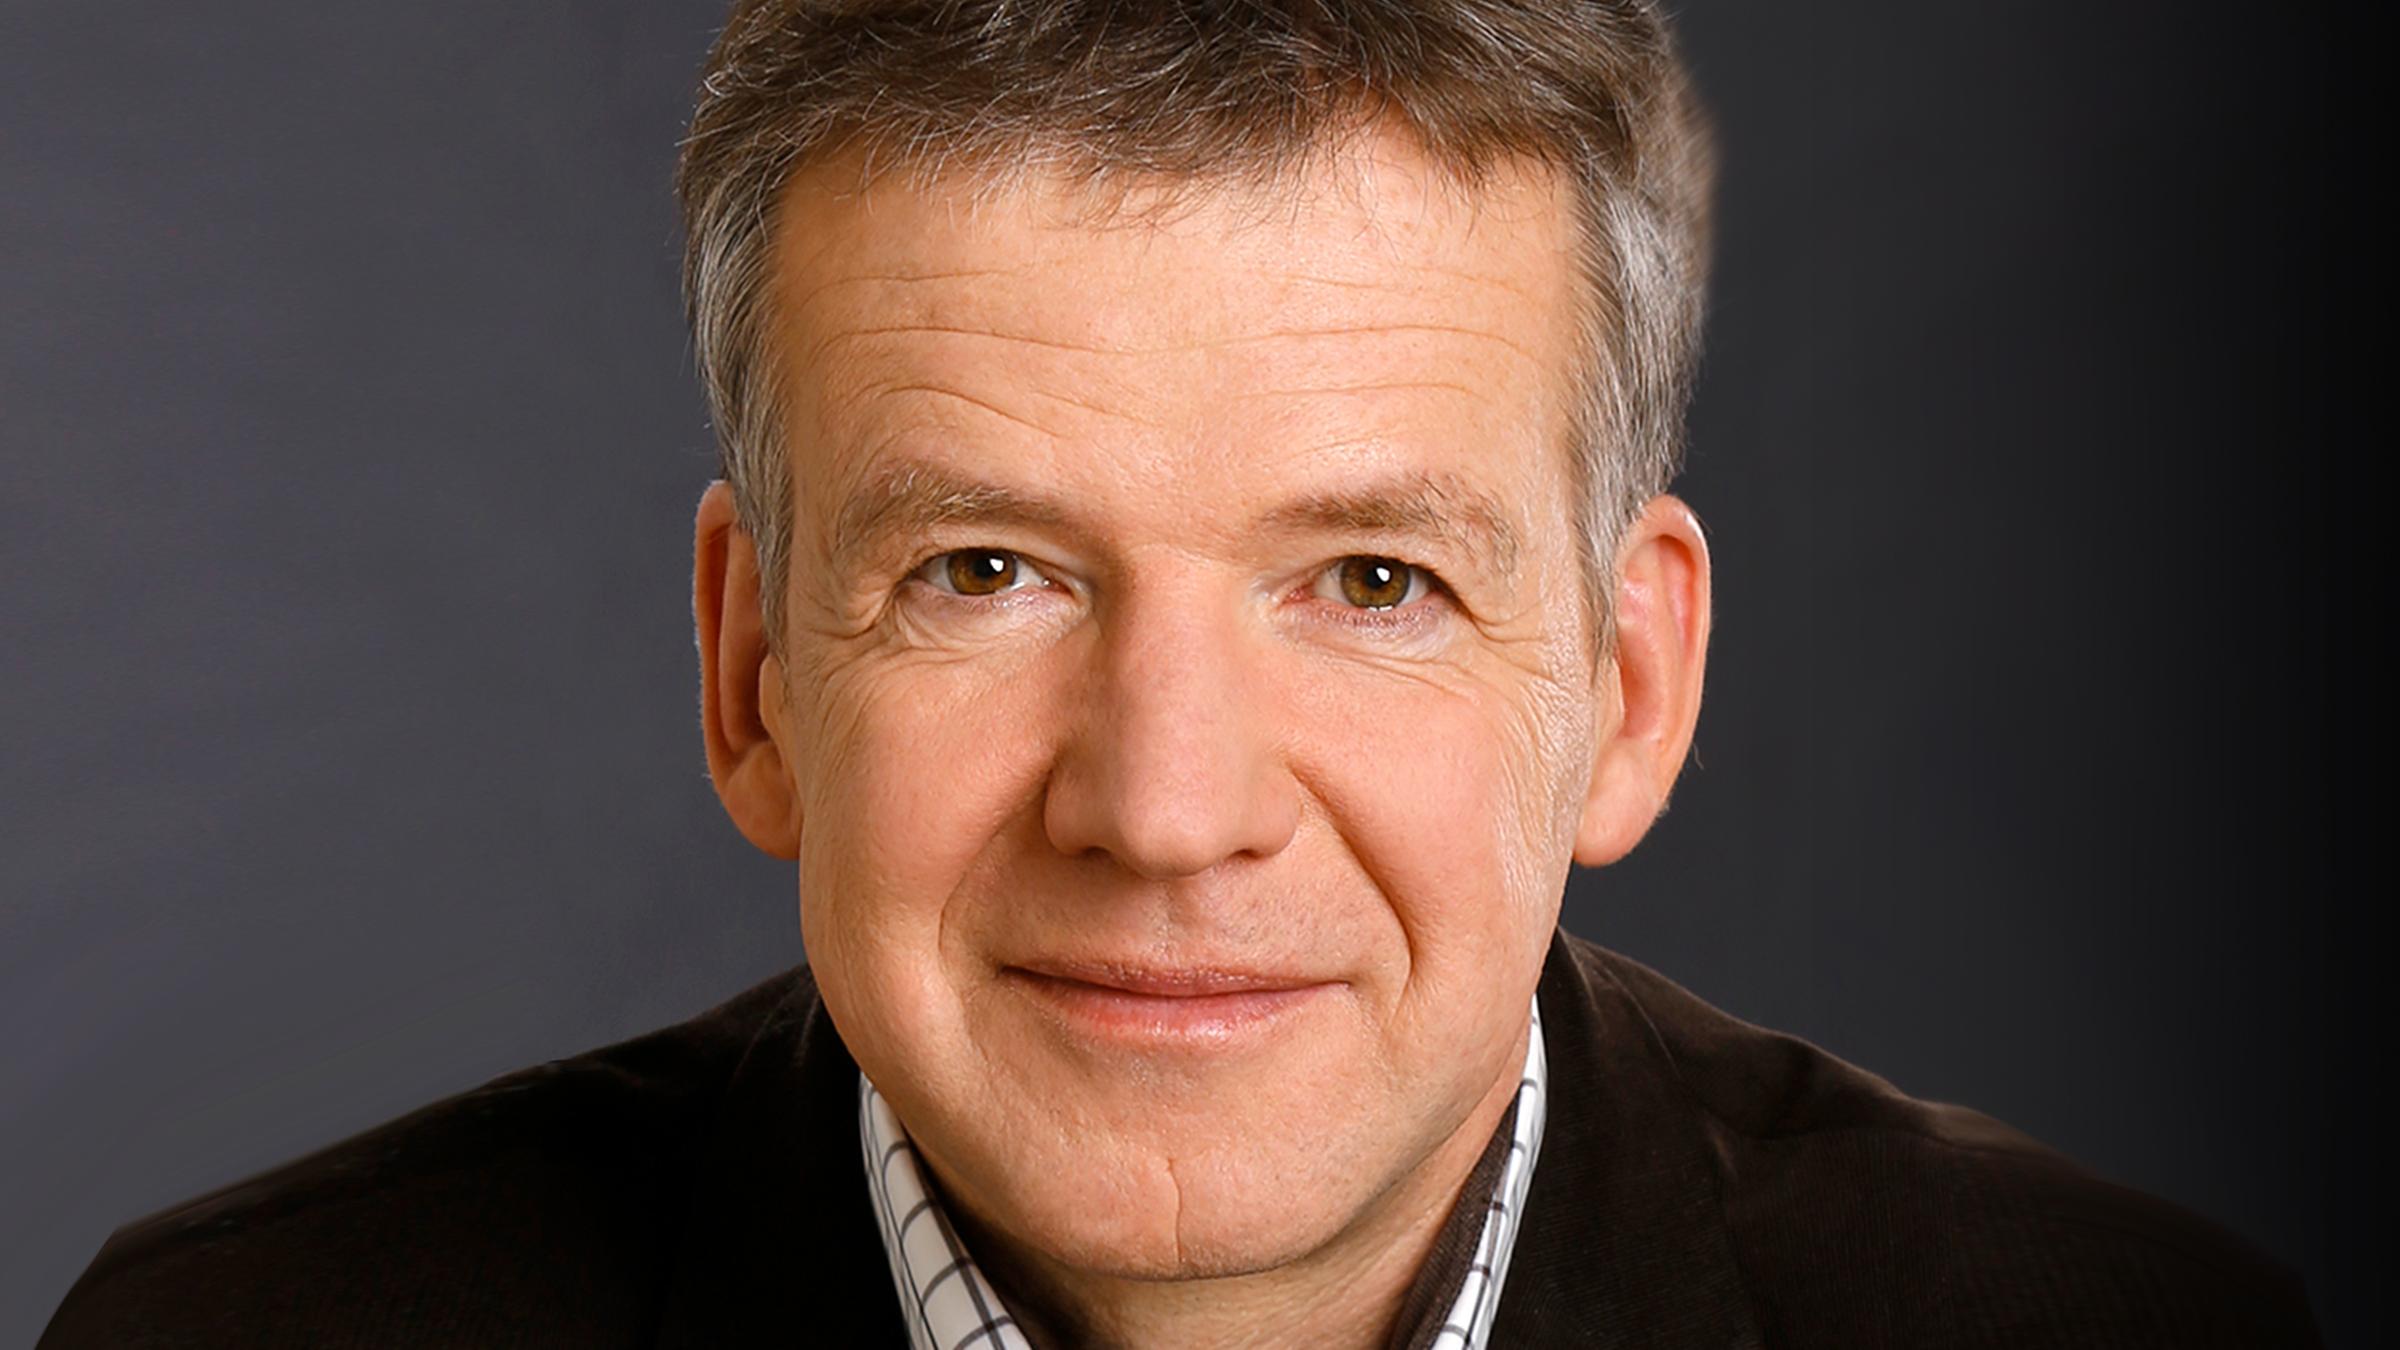 Professor Dr. Klaus Pfeifer